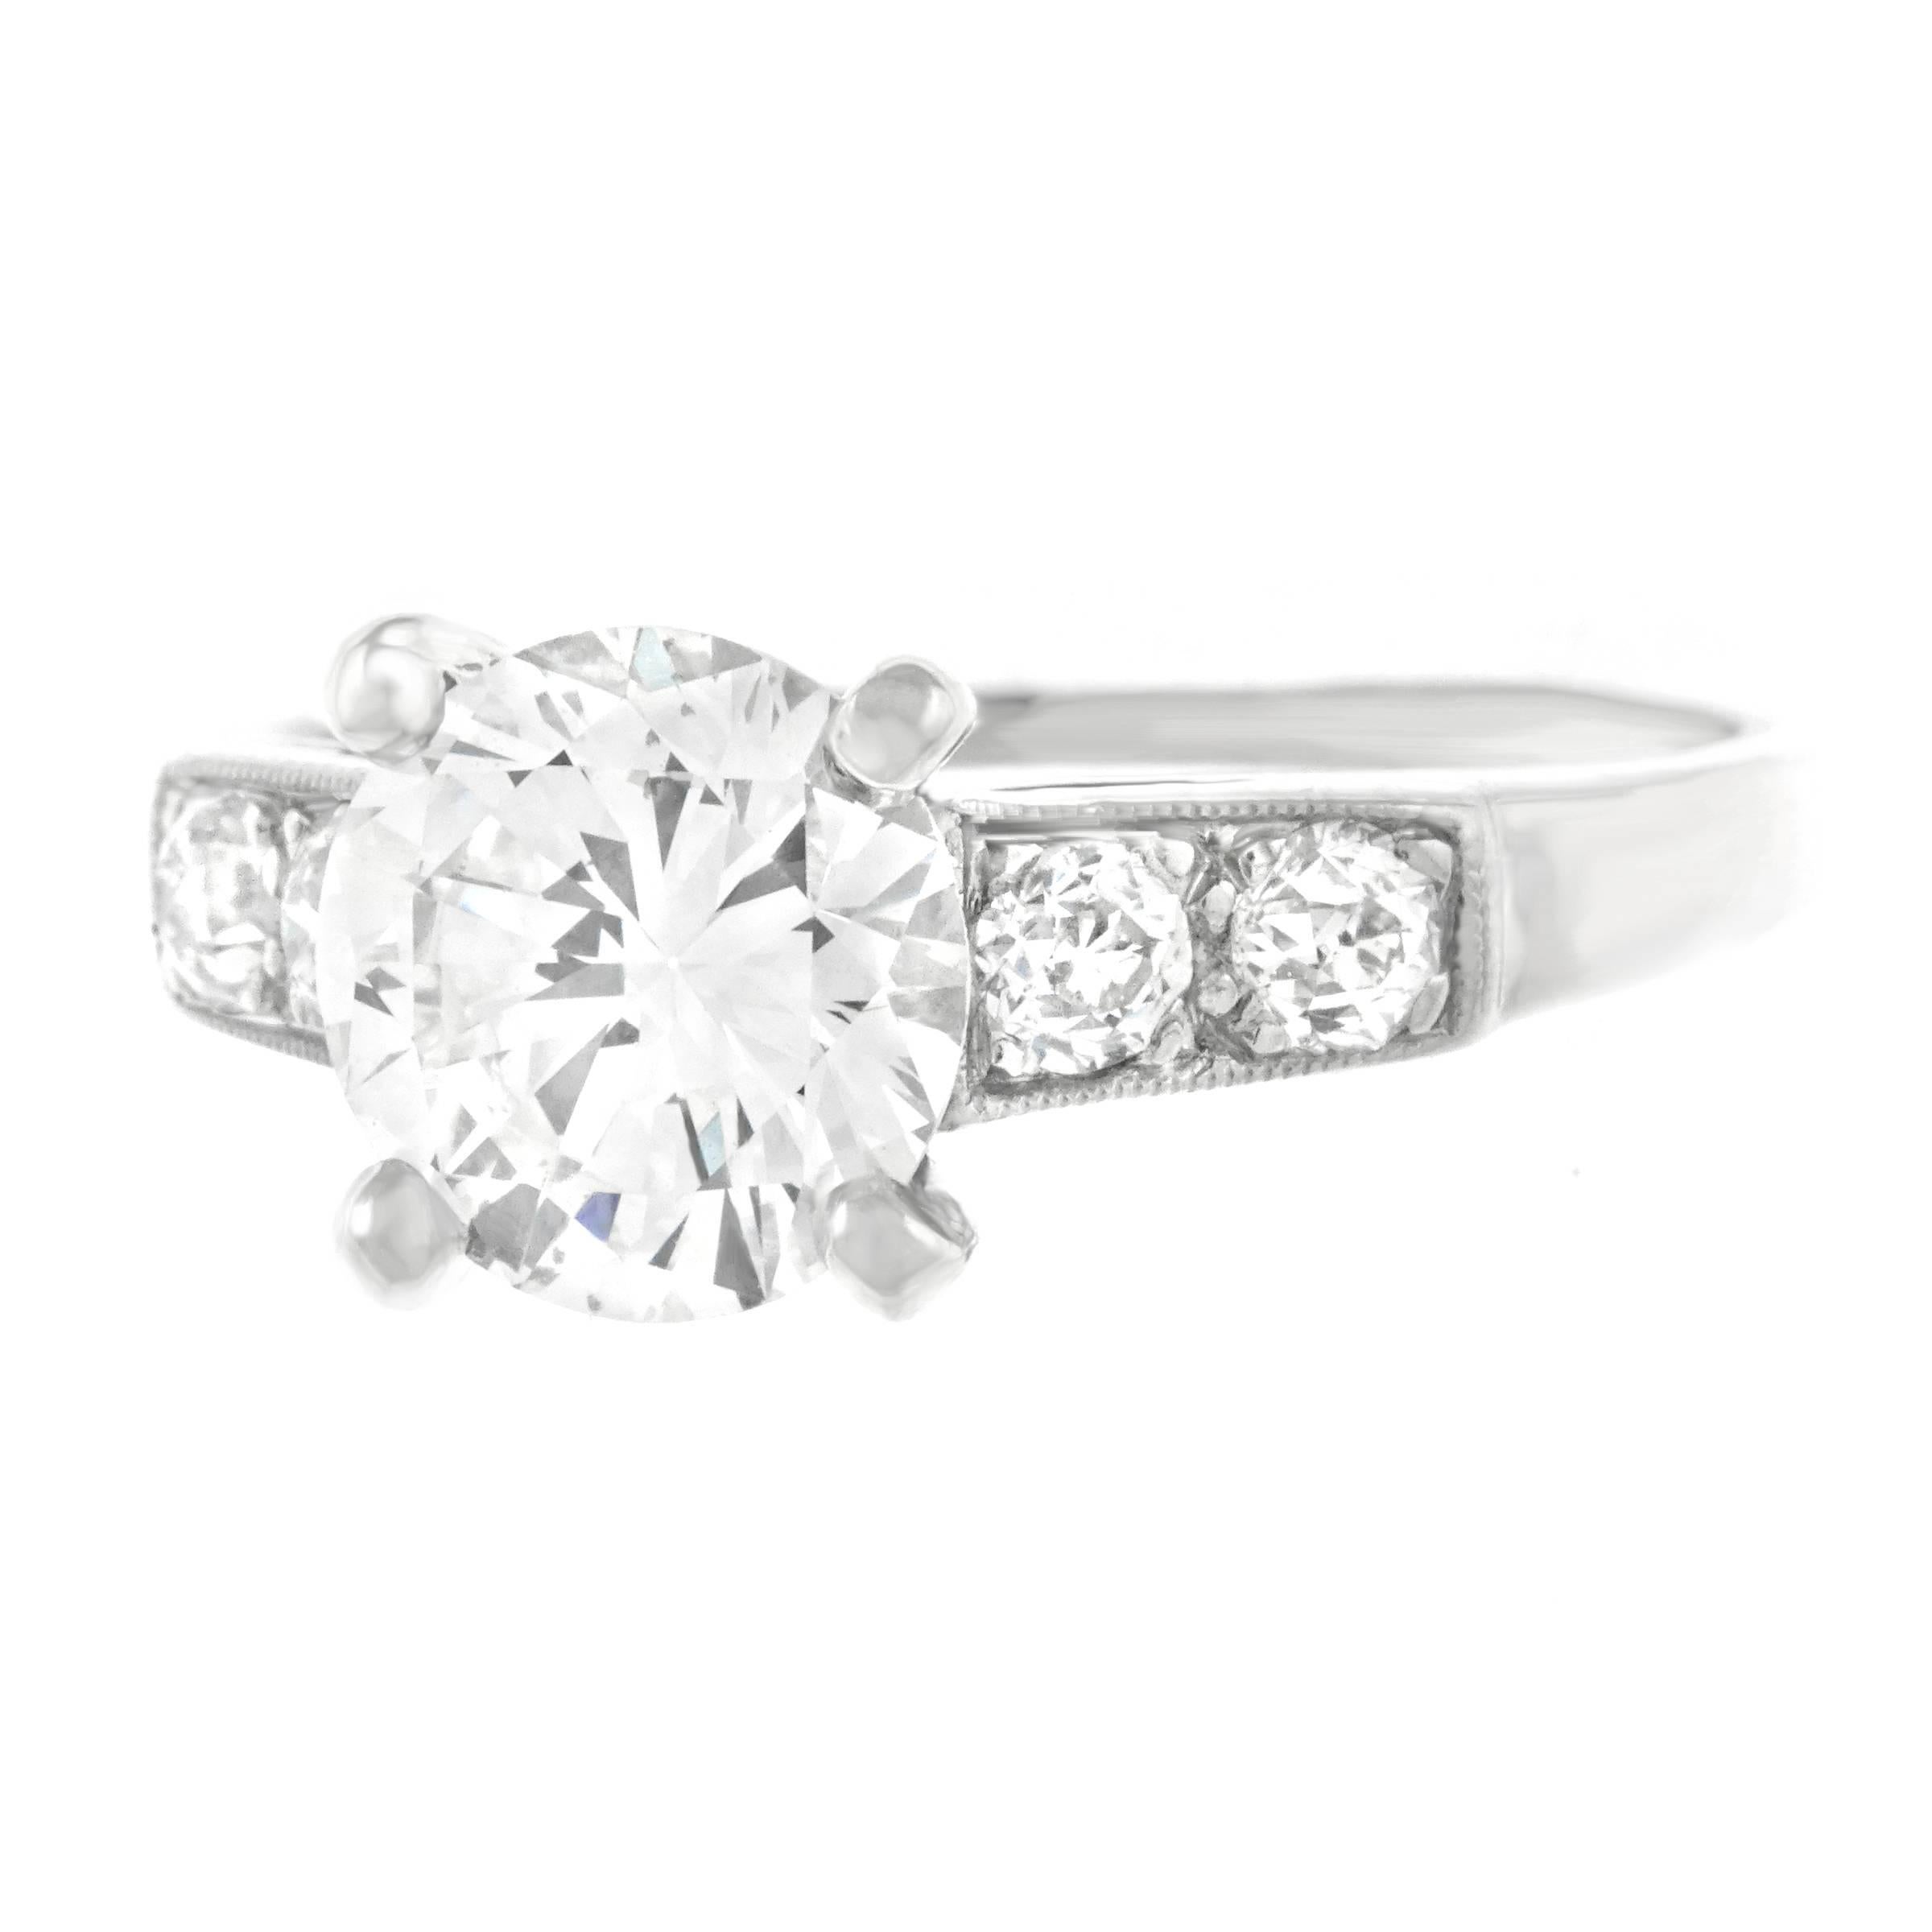 1.77 carat diamond ring